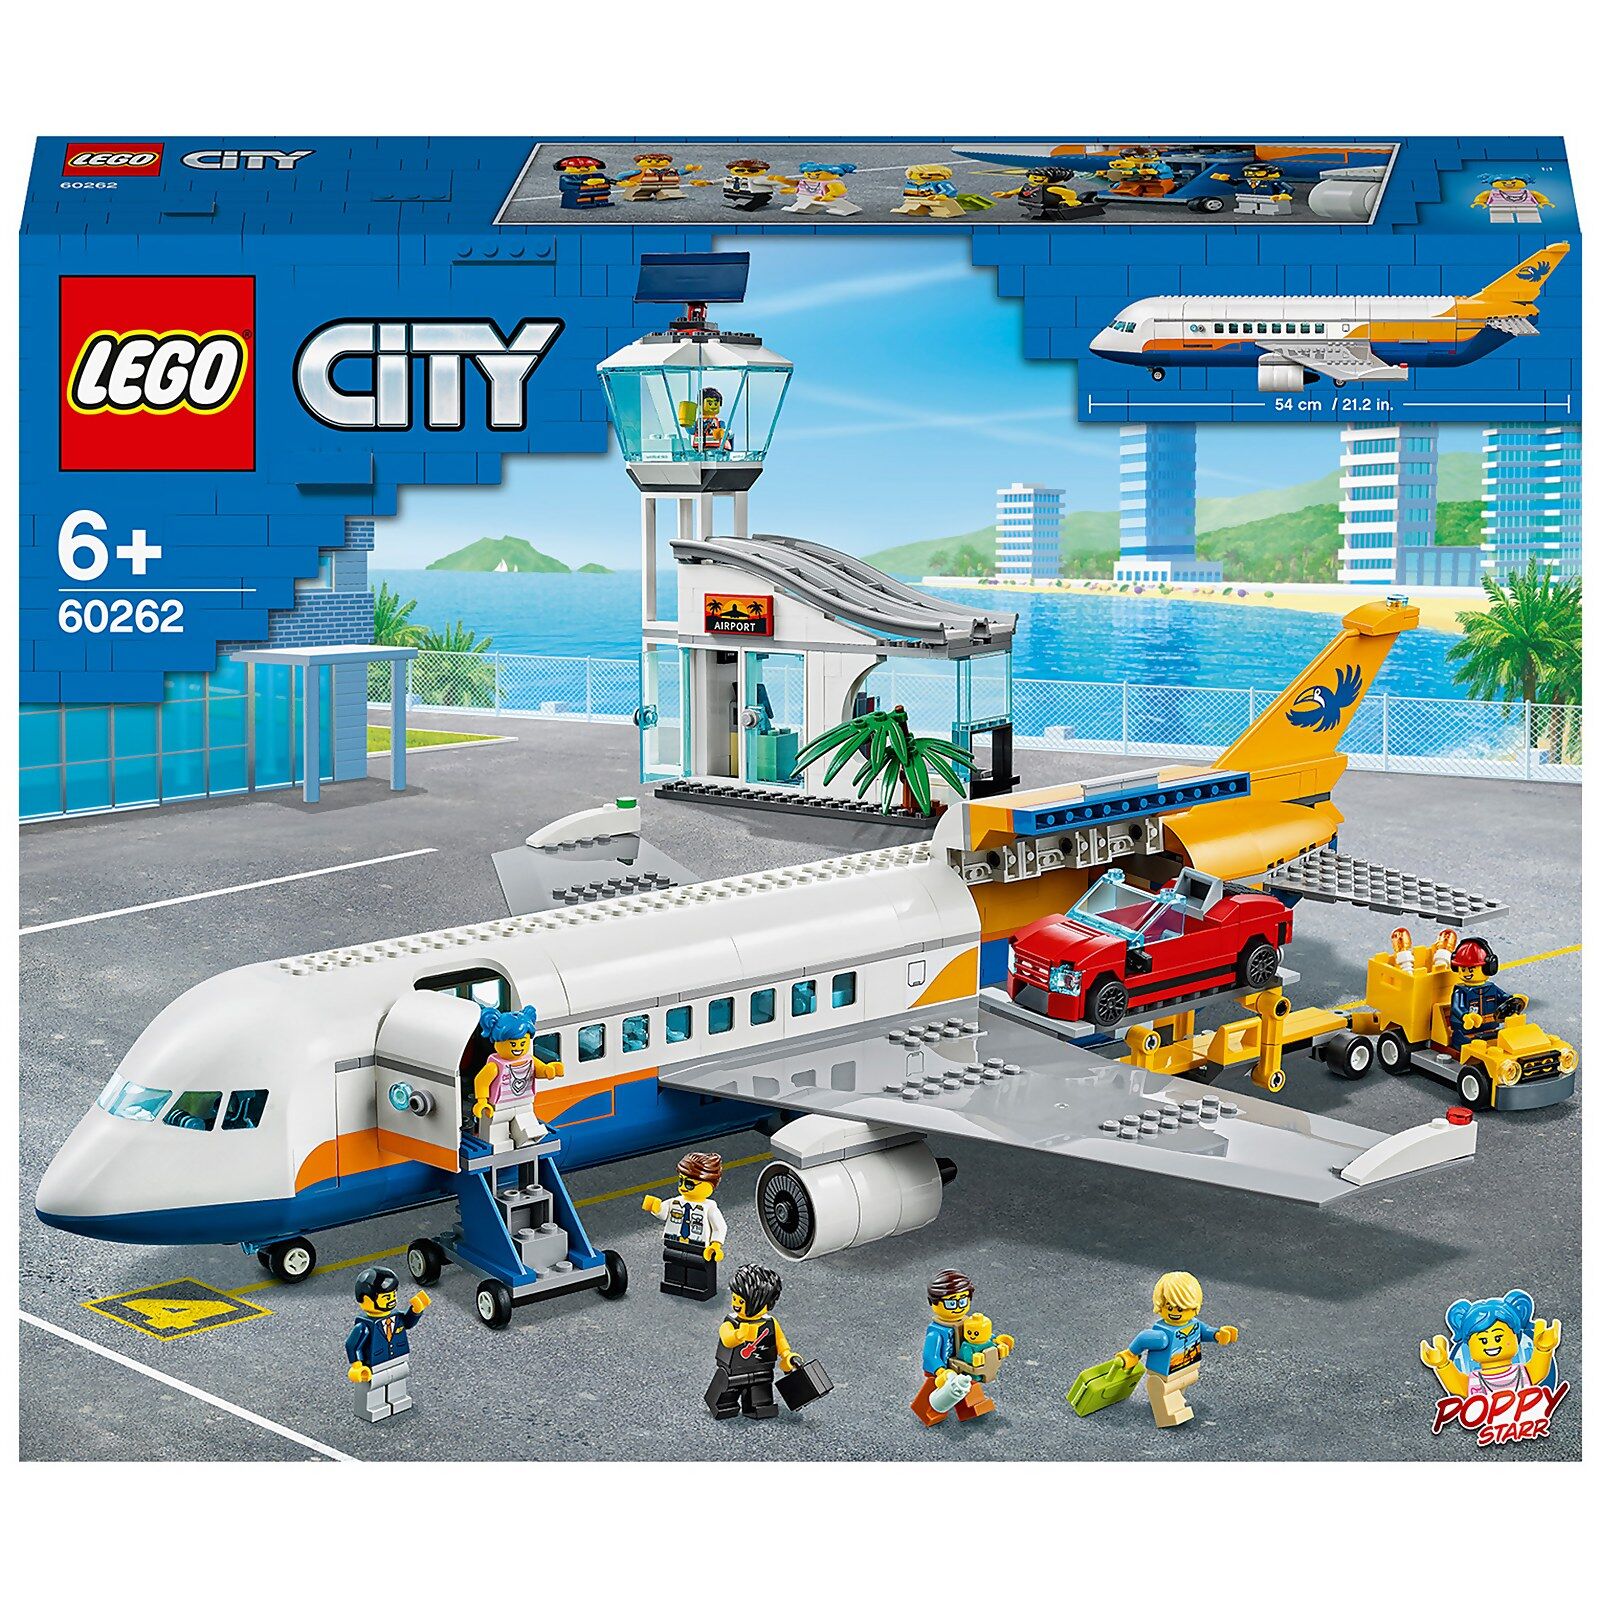 Lego City: Airport Passenger Airplane & Terminal Toy (60262)